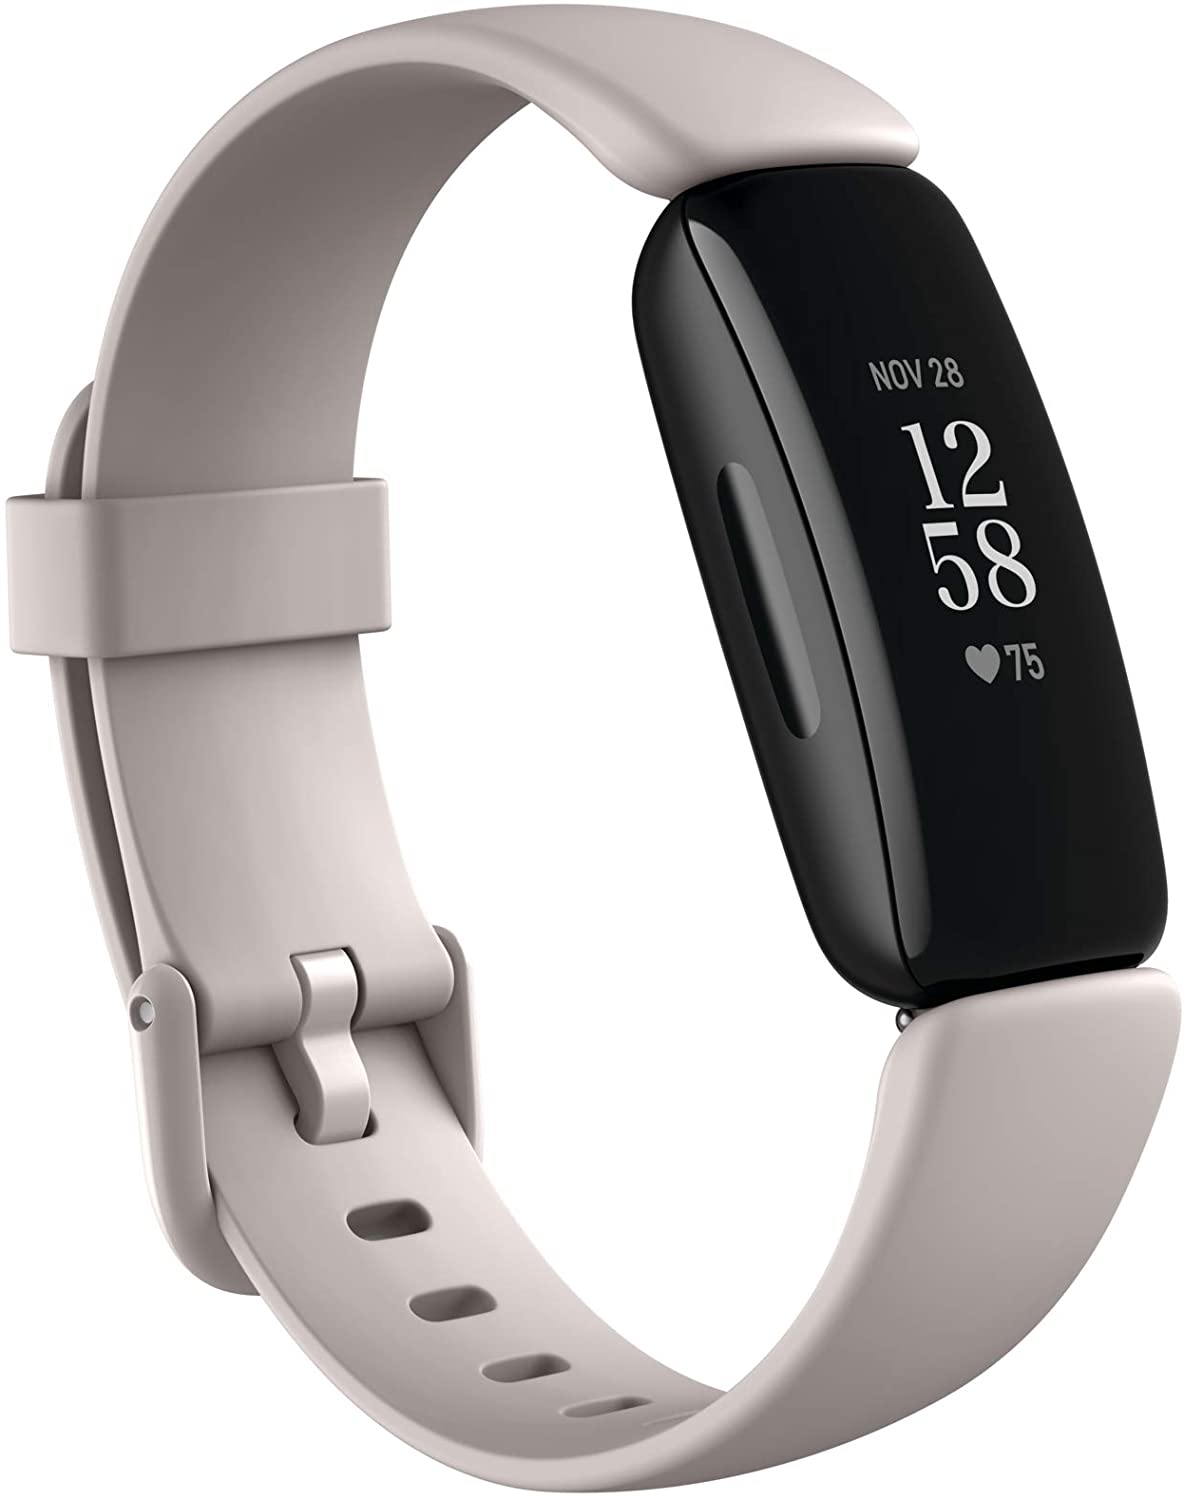 Fitbit Inspire 2 Health & Fitness Tracker.jpg